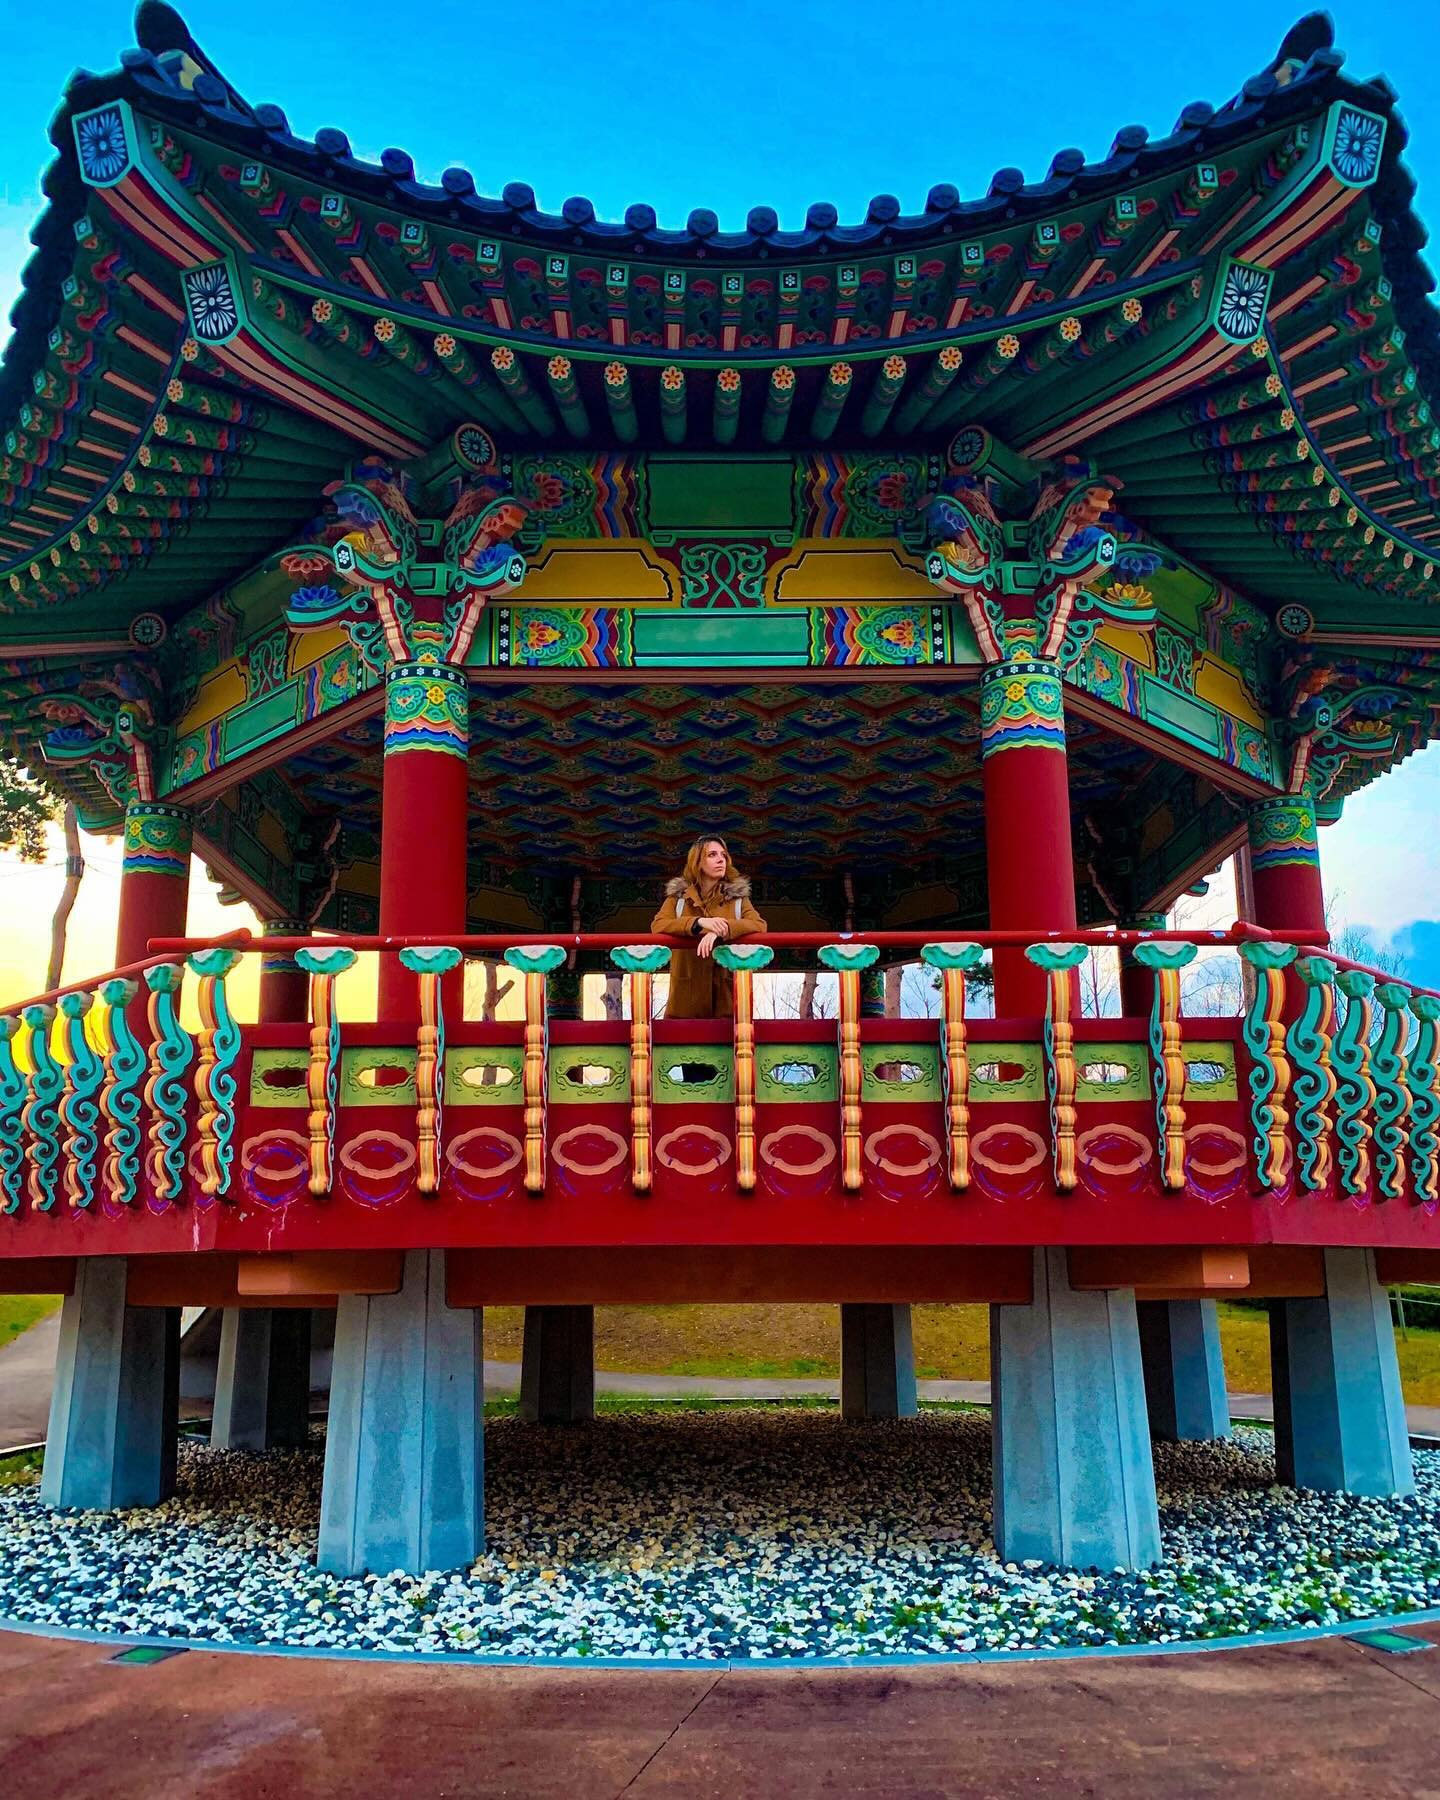 Such beautiful art 🥰 #korea #busan #art #architecture #colorful #beauty #travel